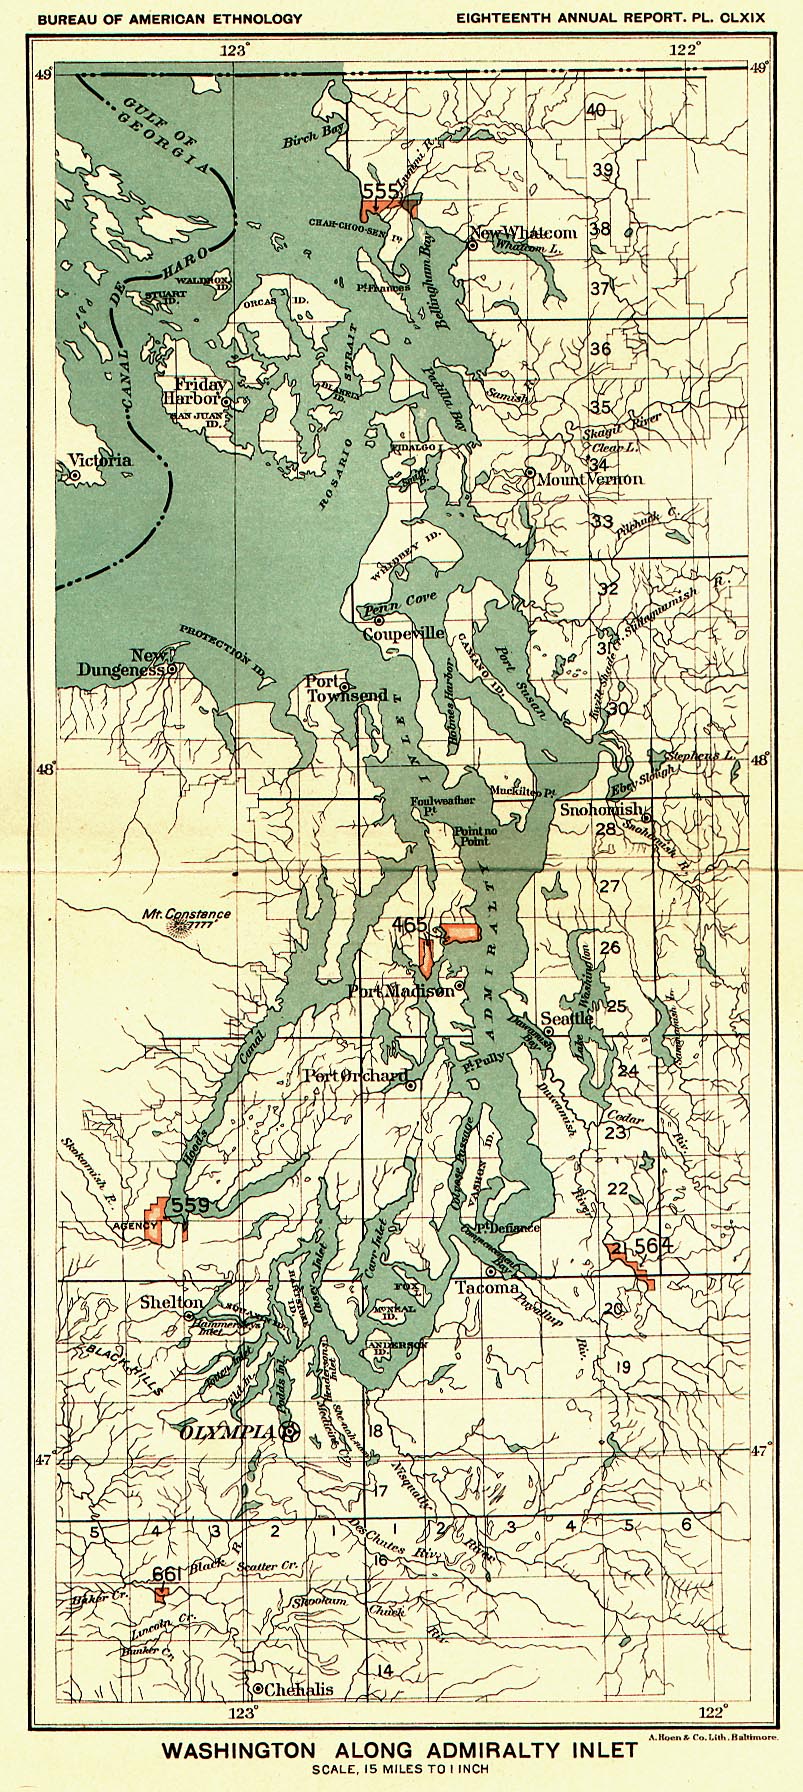 Washington Along Admiralty Inlet, Map 
62